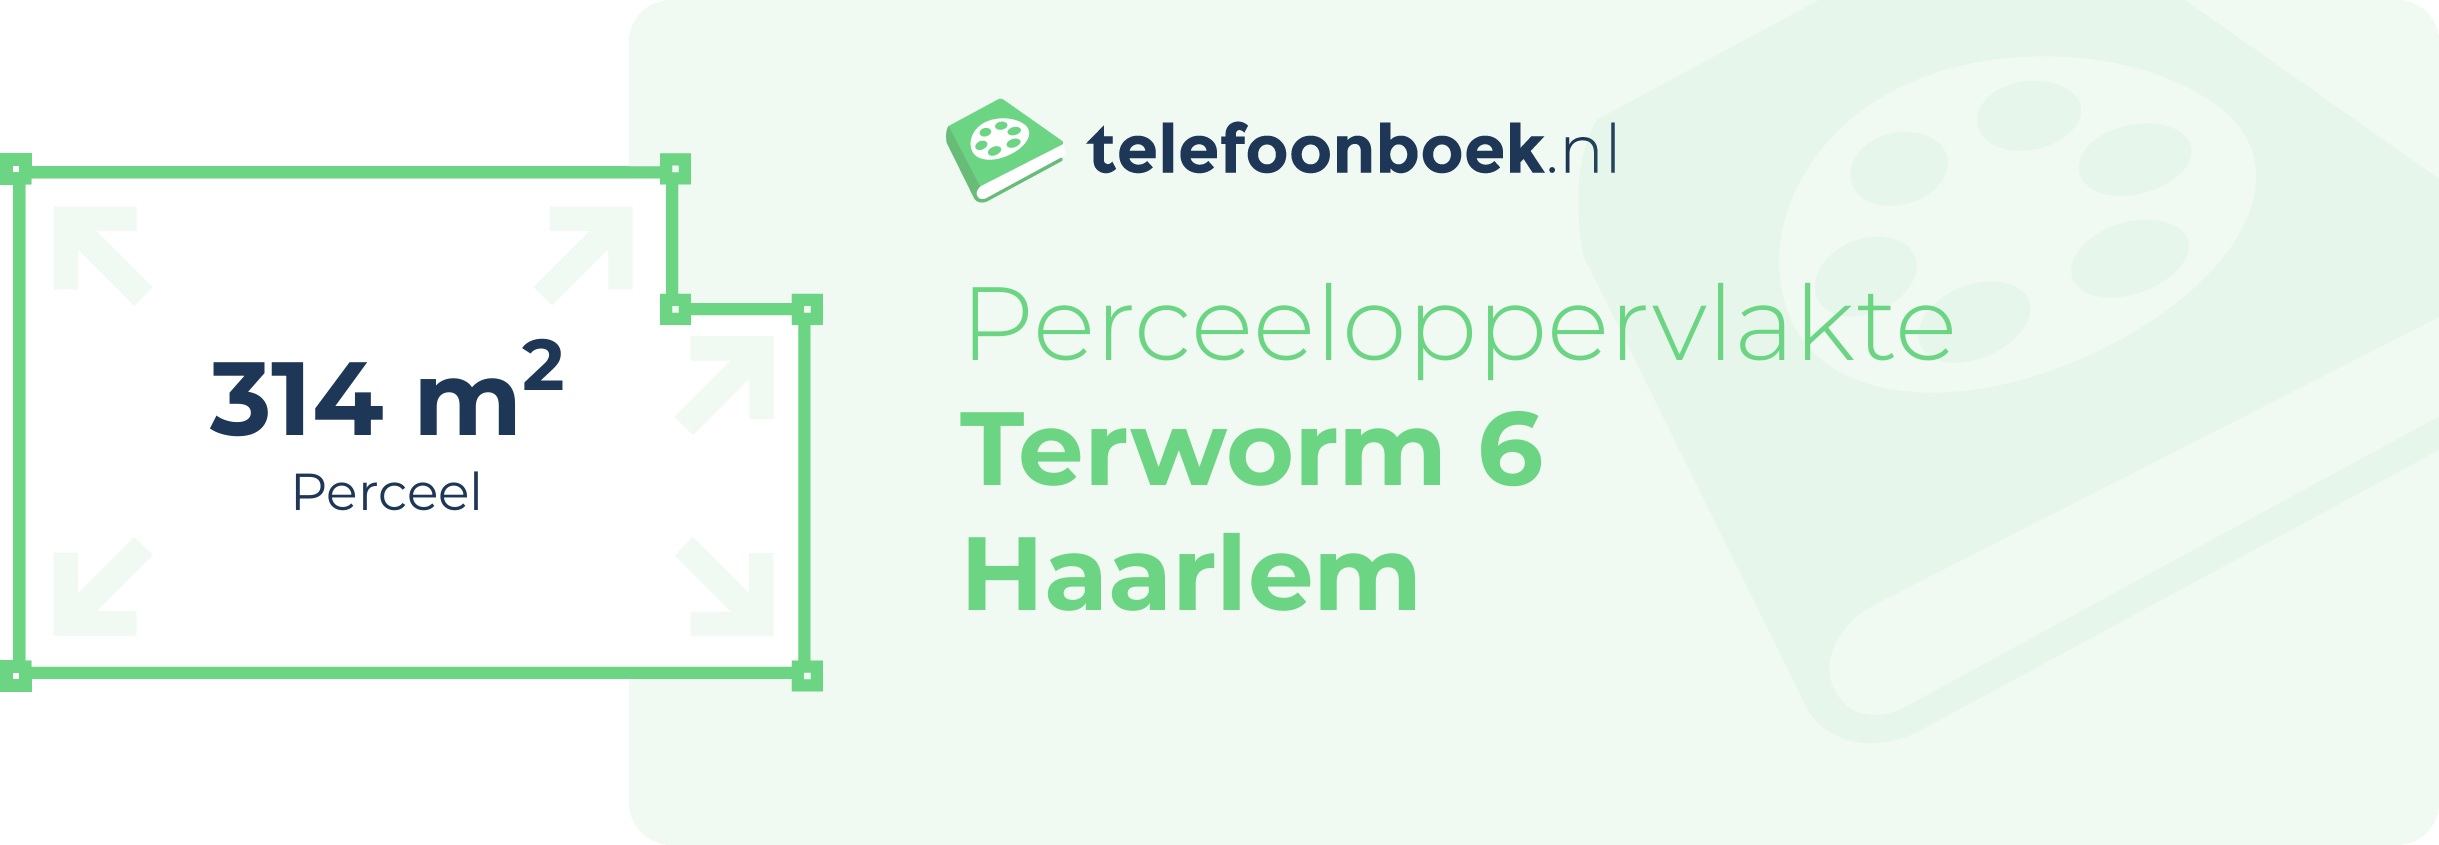 Perceeloppervlakte Terworm 6 Haarlem